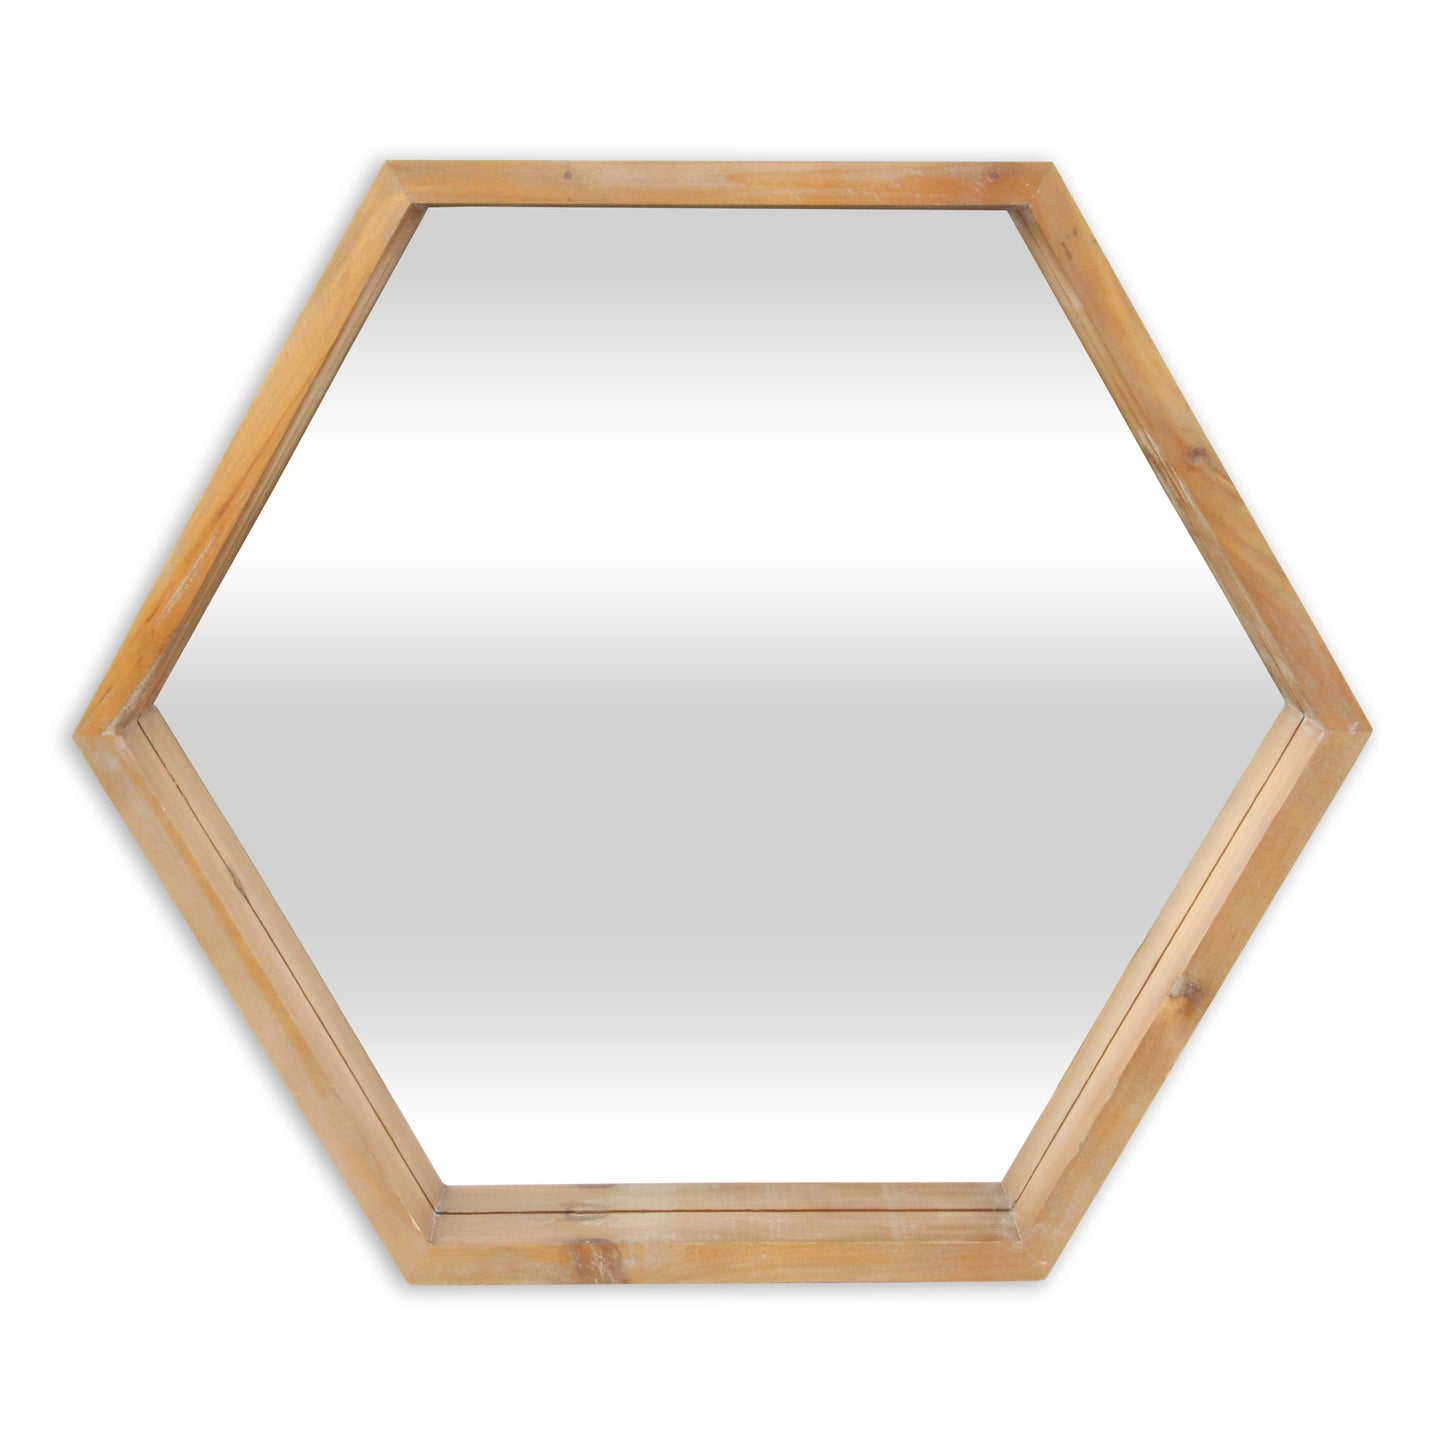 Modern Natural Wood Finish Hexagonal Wall Mirror By Homeroots